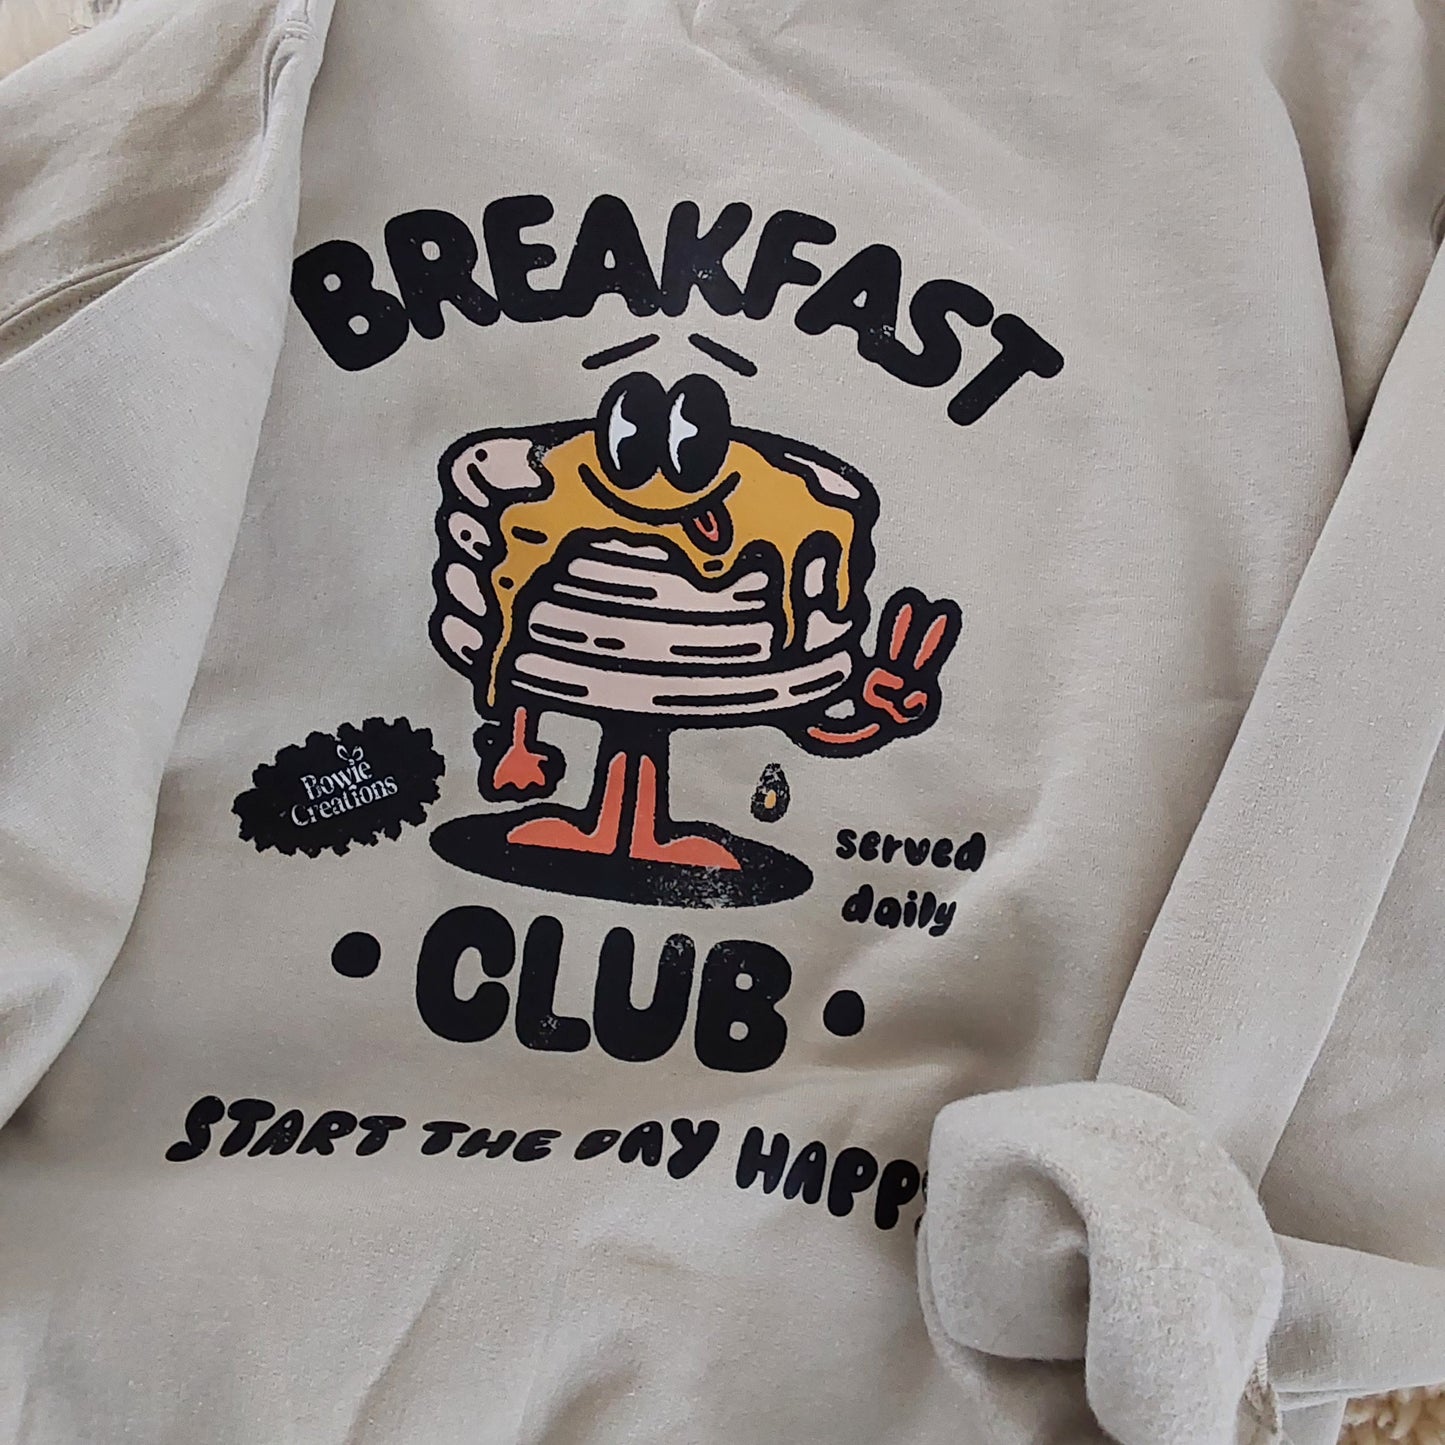 Breakfast club sweatshirt